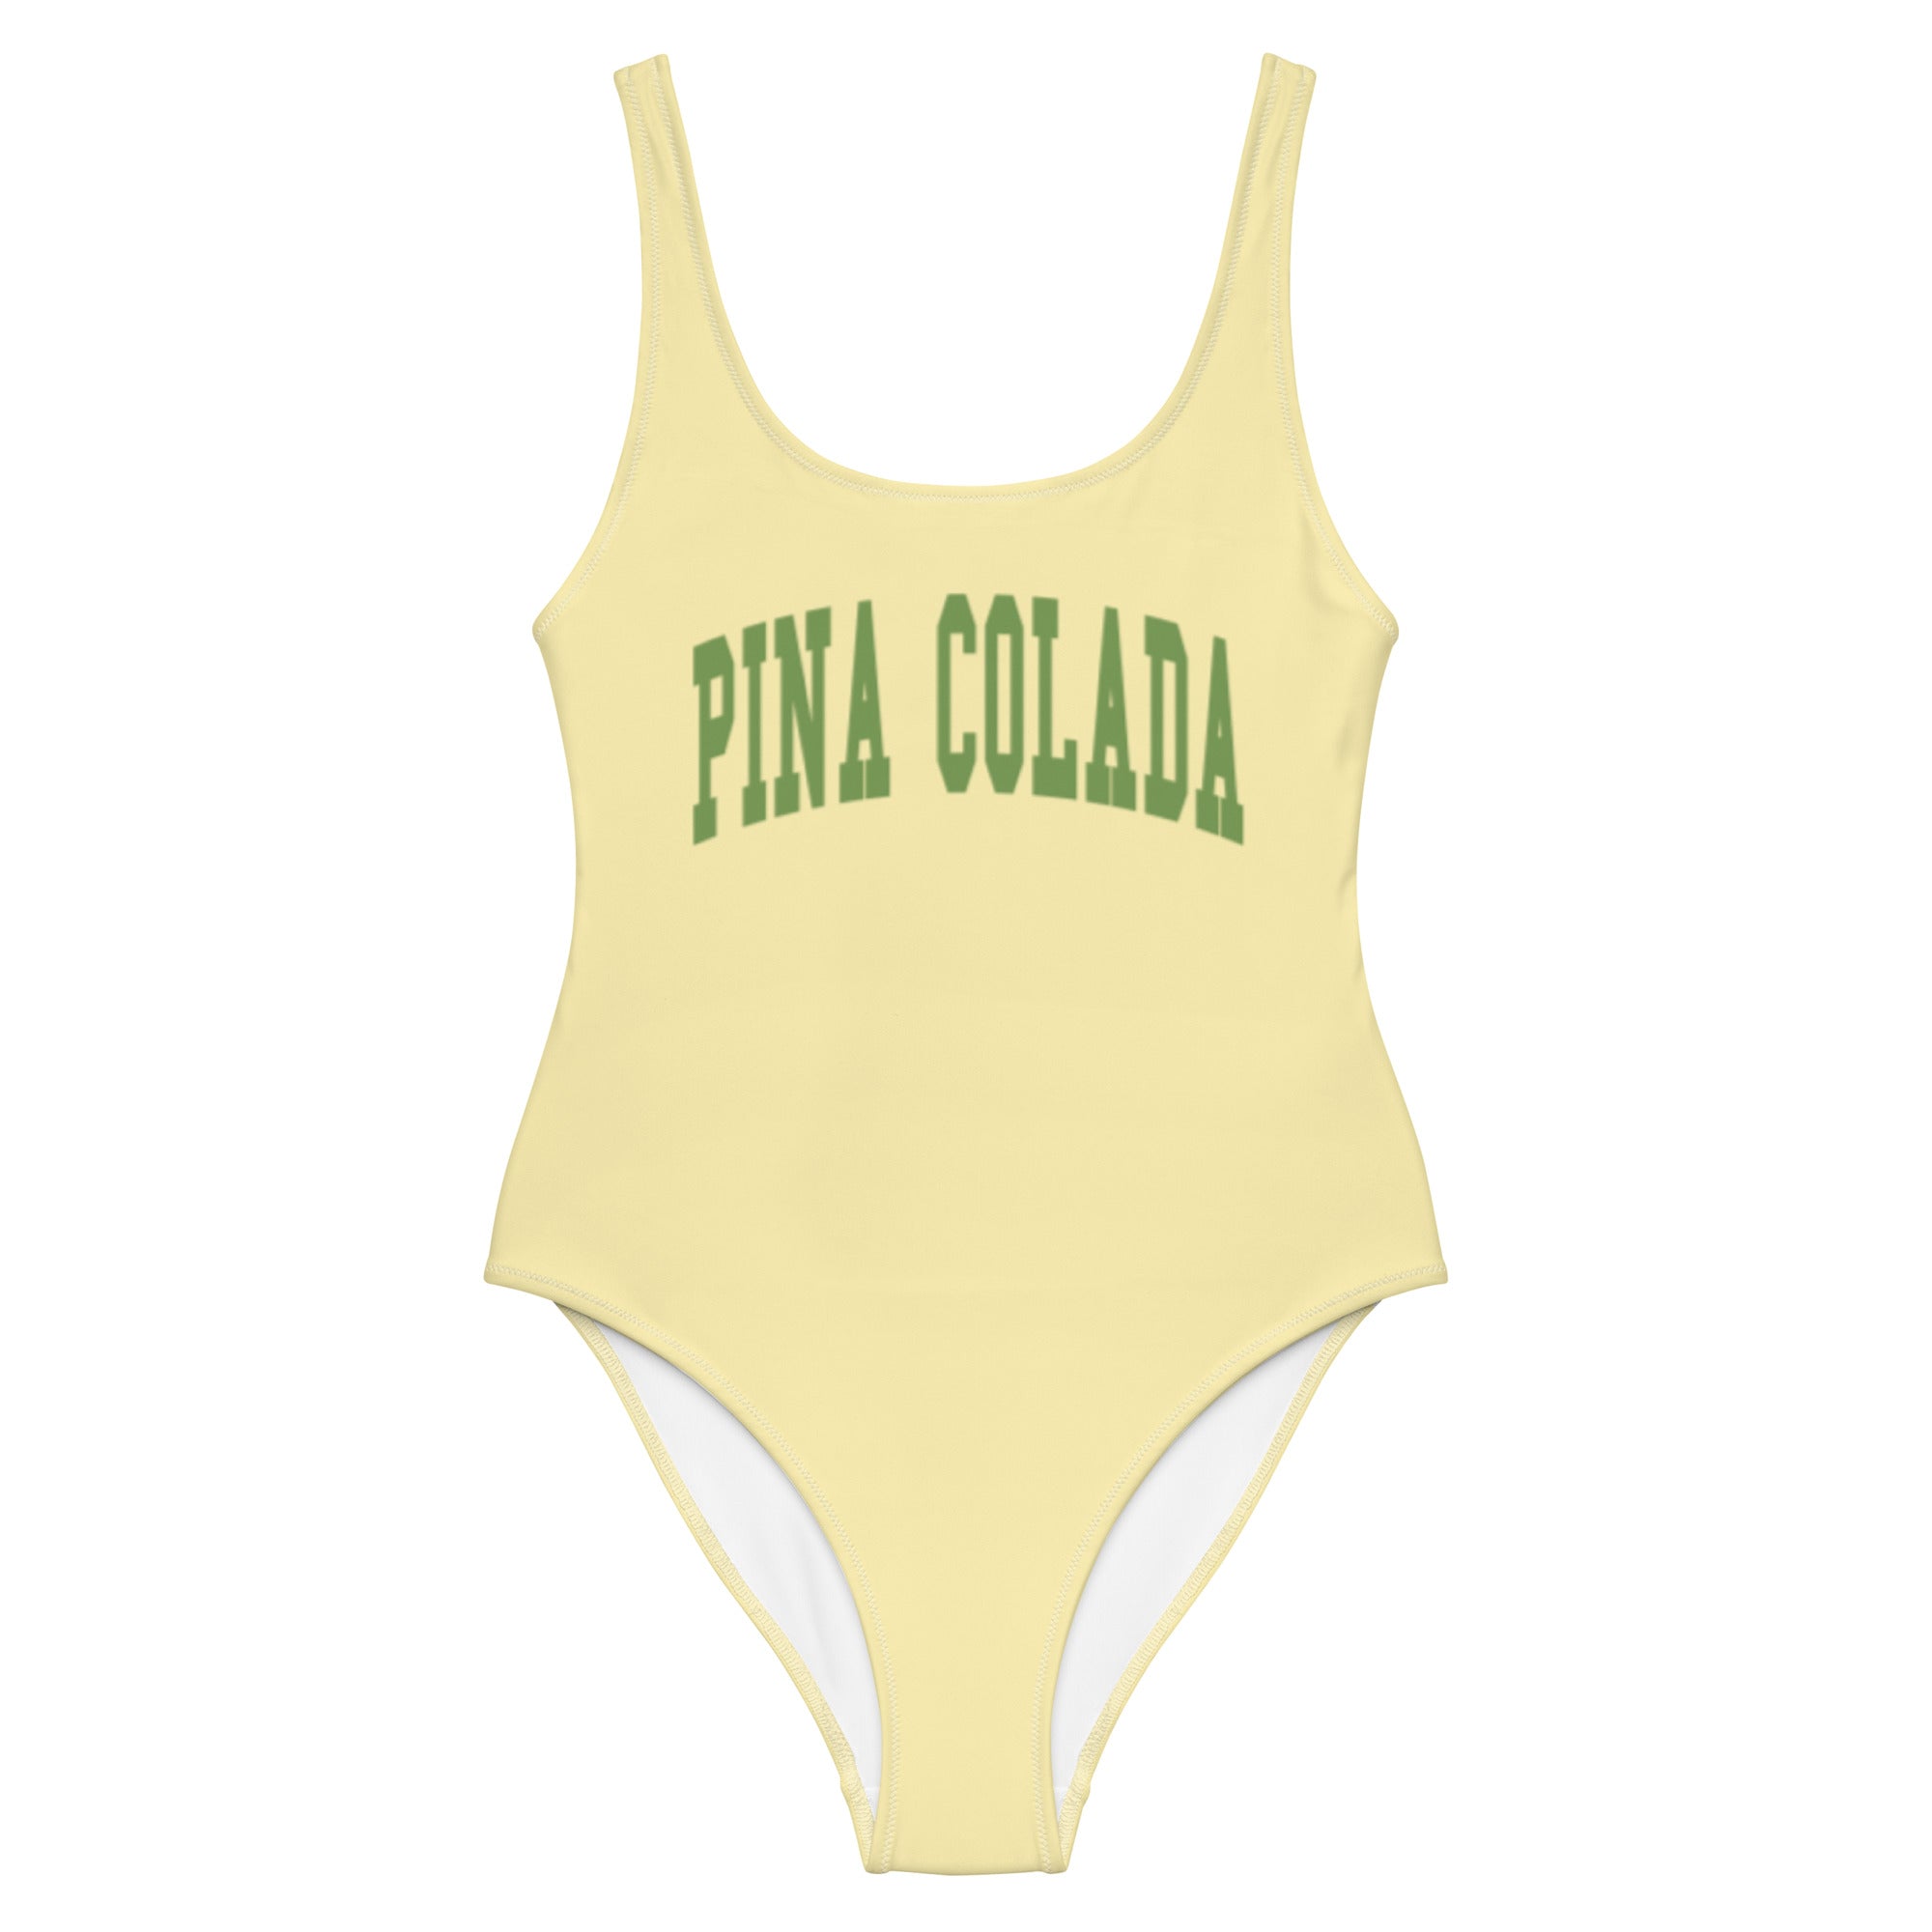 Pina Colada - Swimsuit - The Refined Spirit